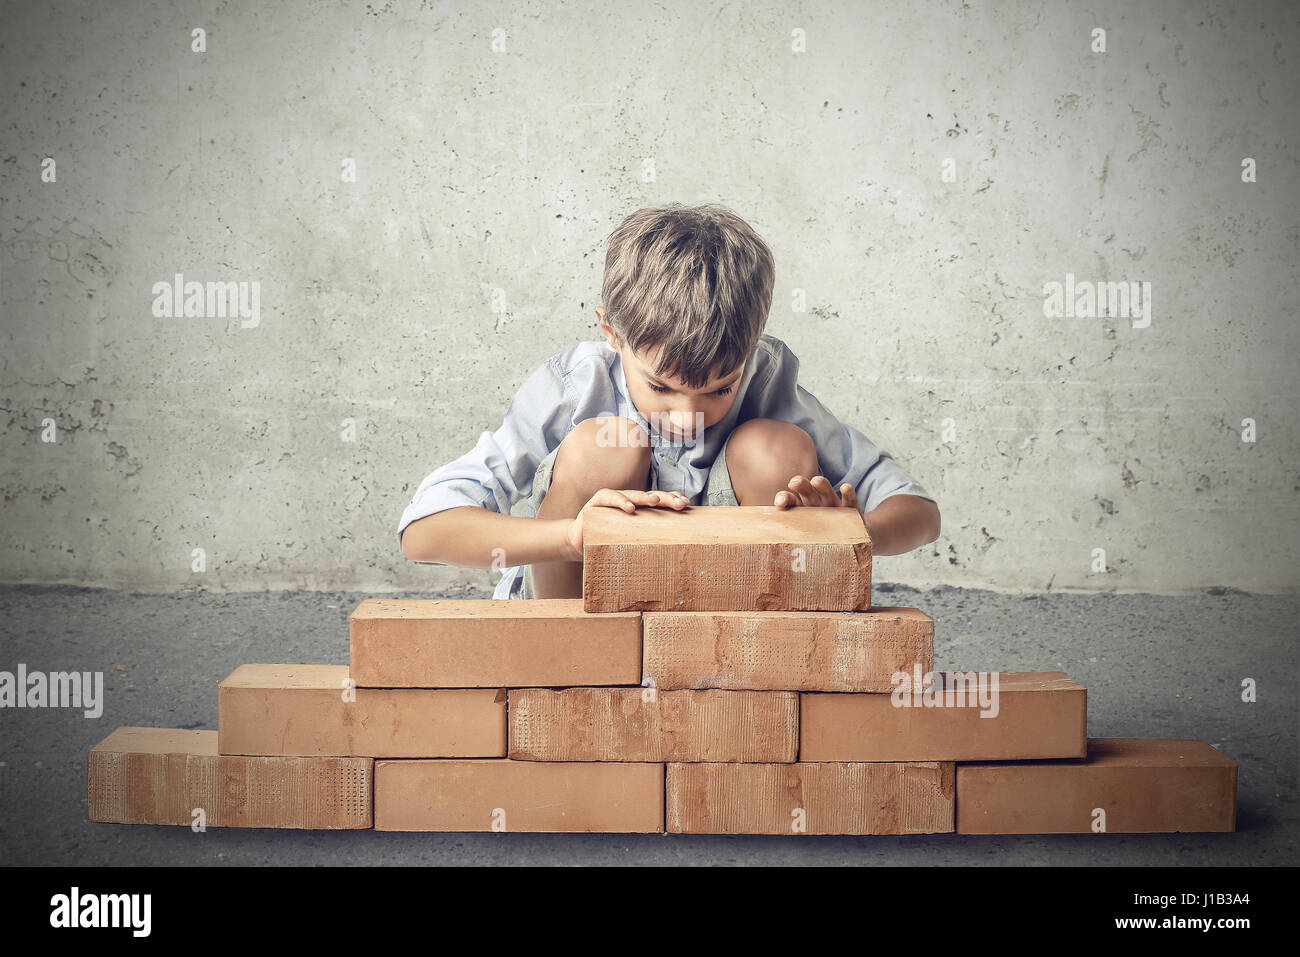 boy playing with bricks Stock Photo